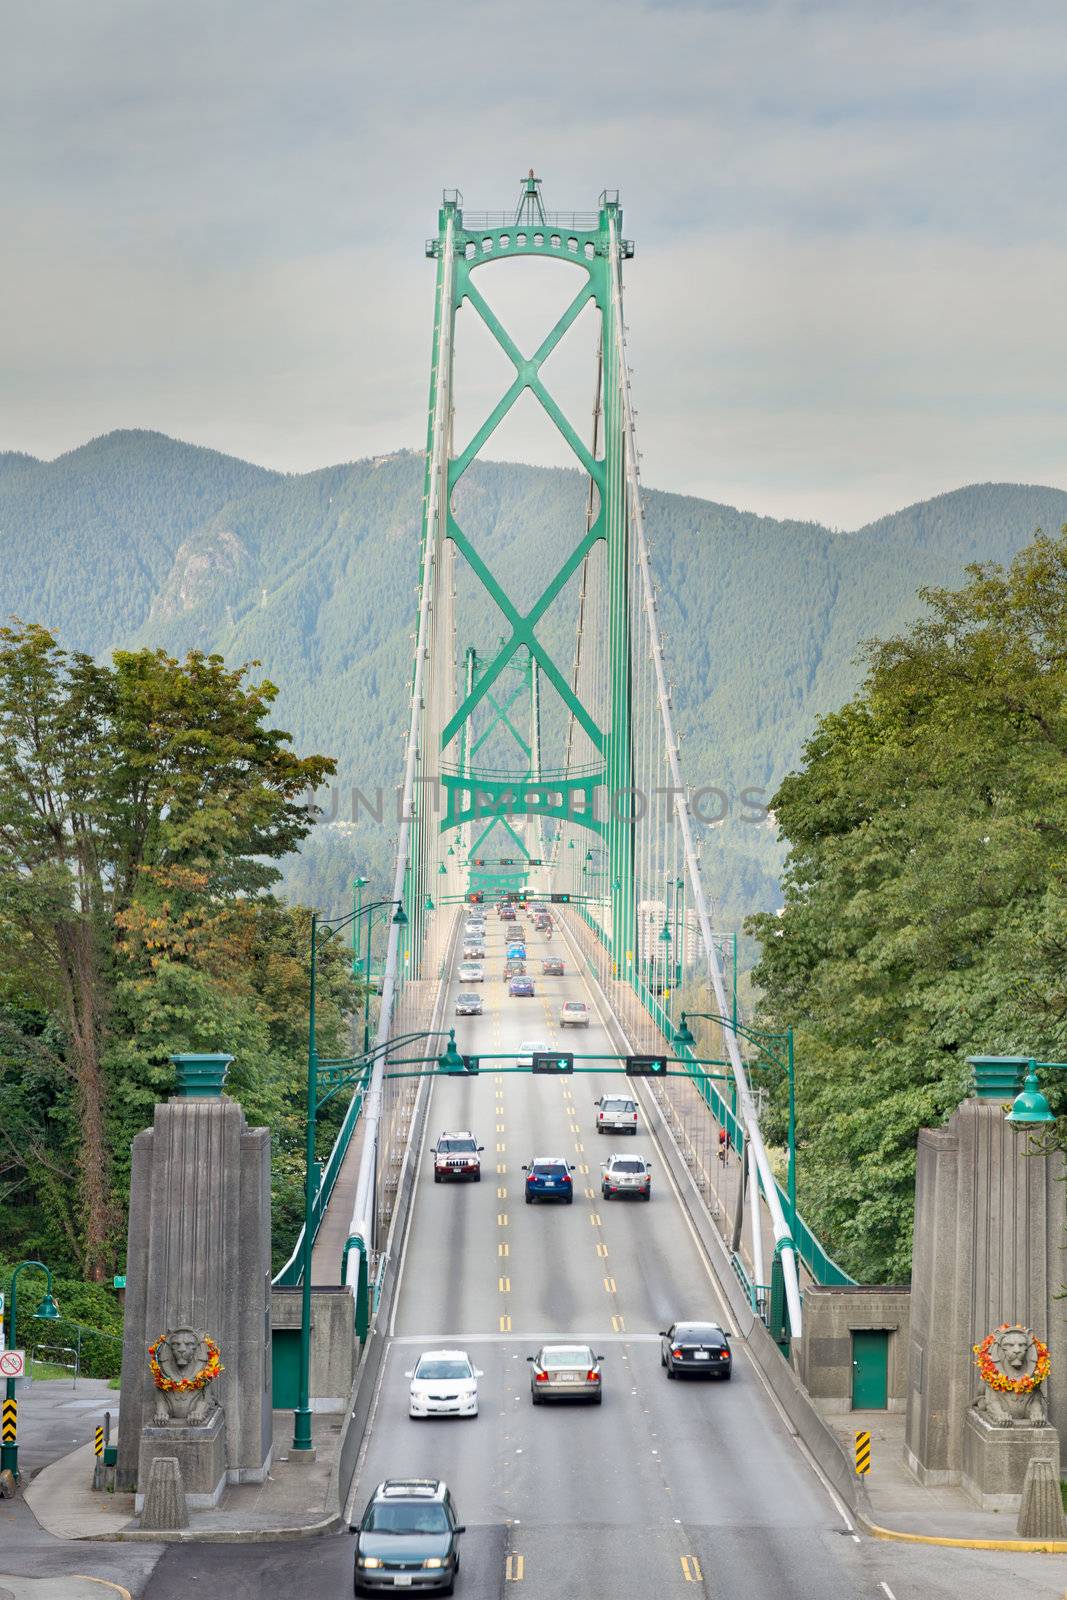 Lions Gate Bridge Entrance in Vancouver BC Canada